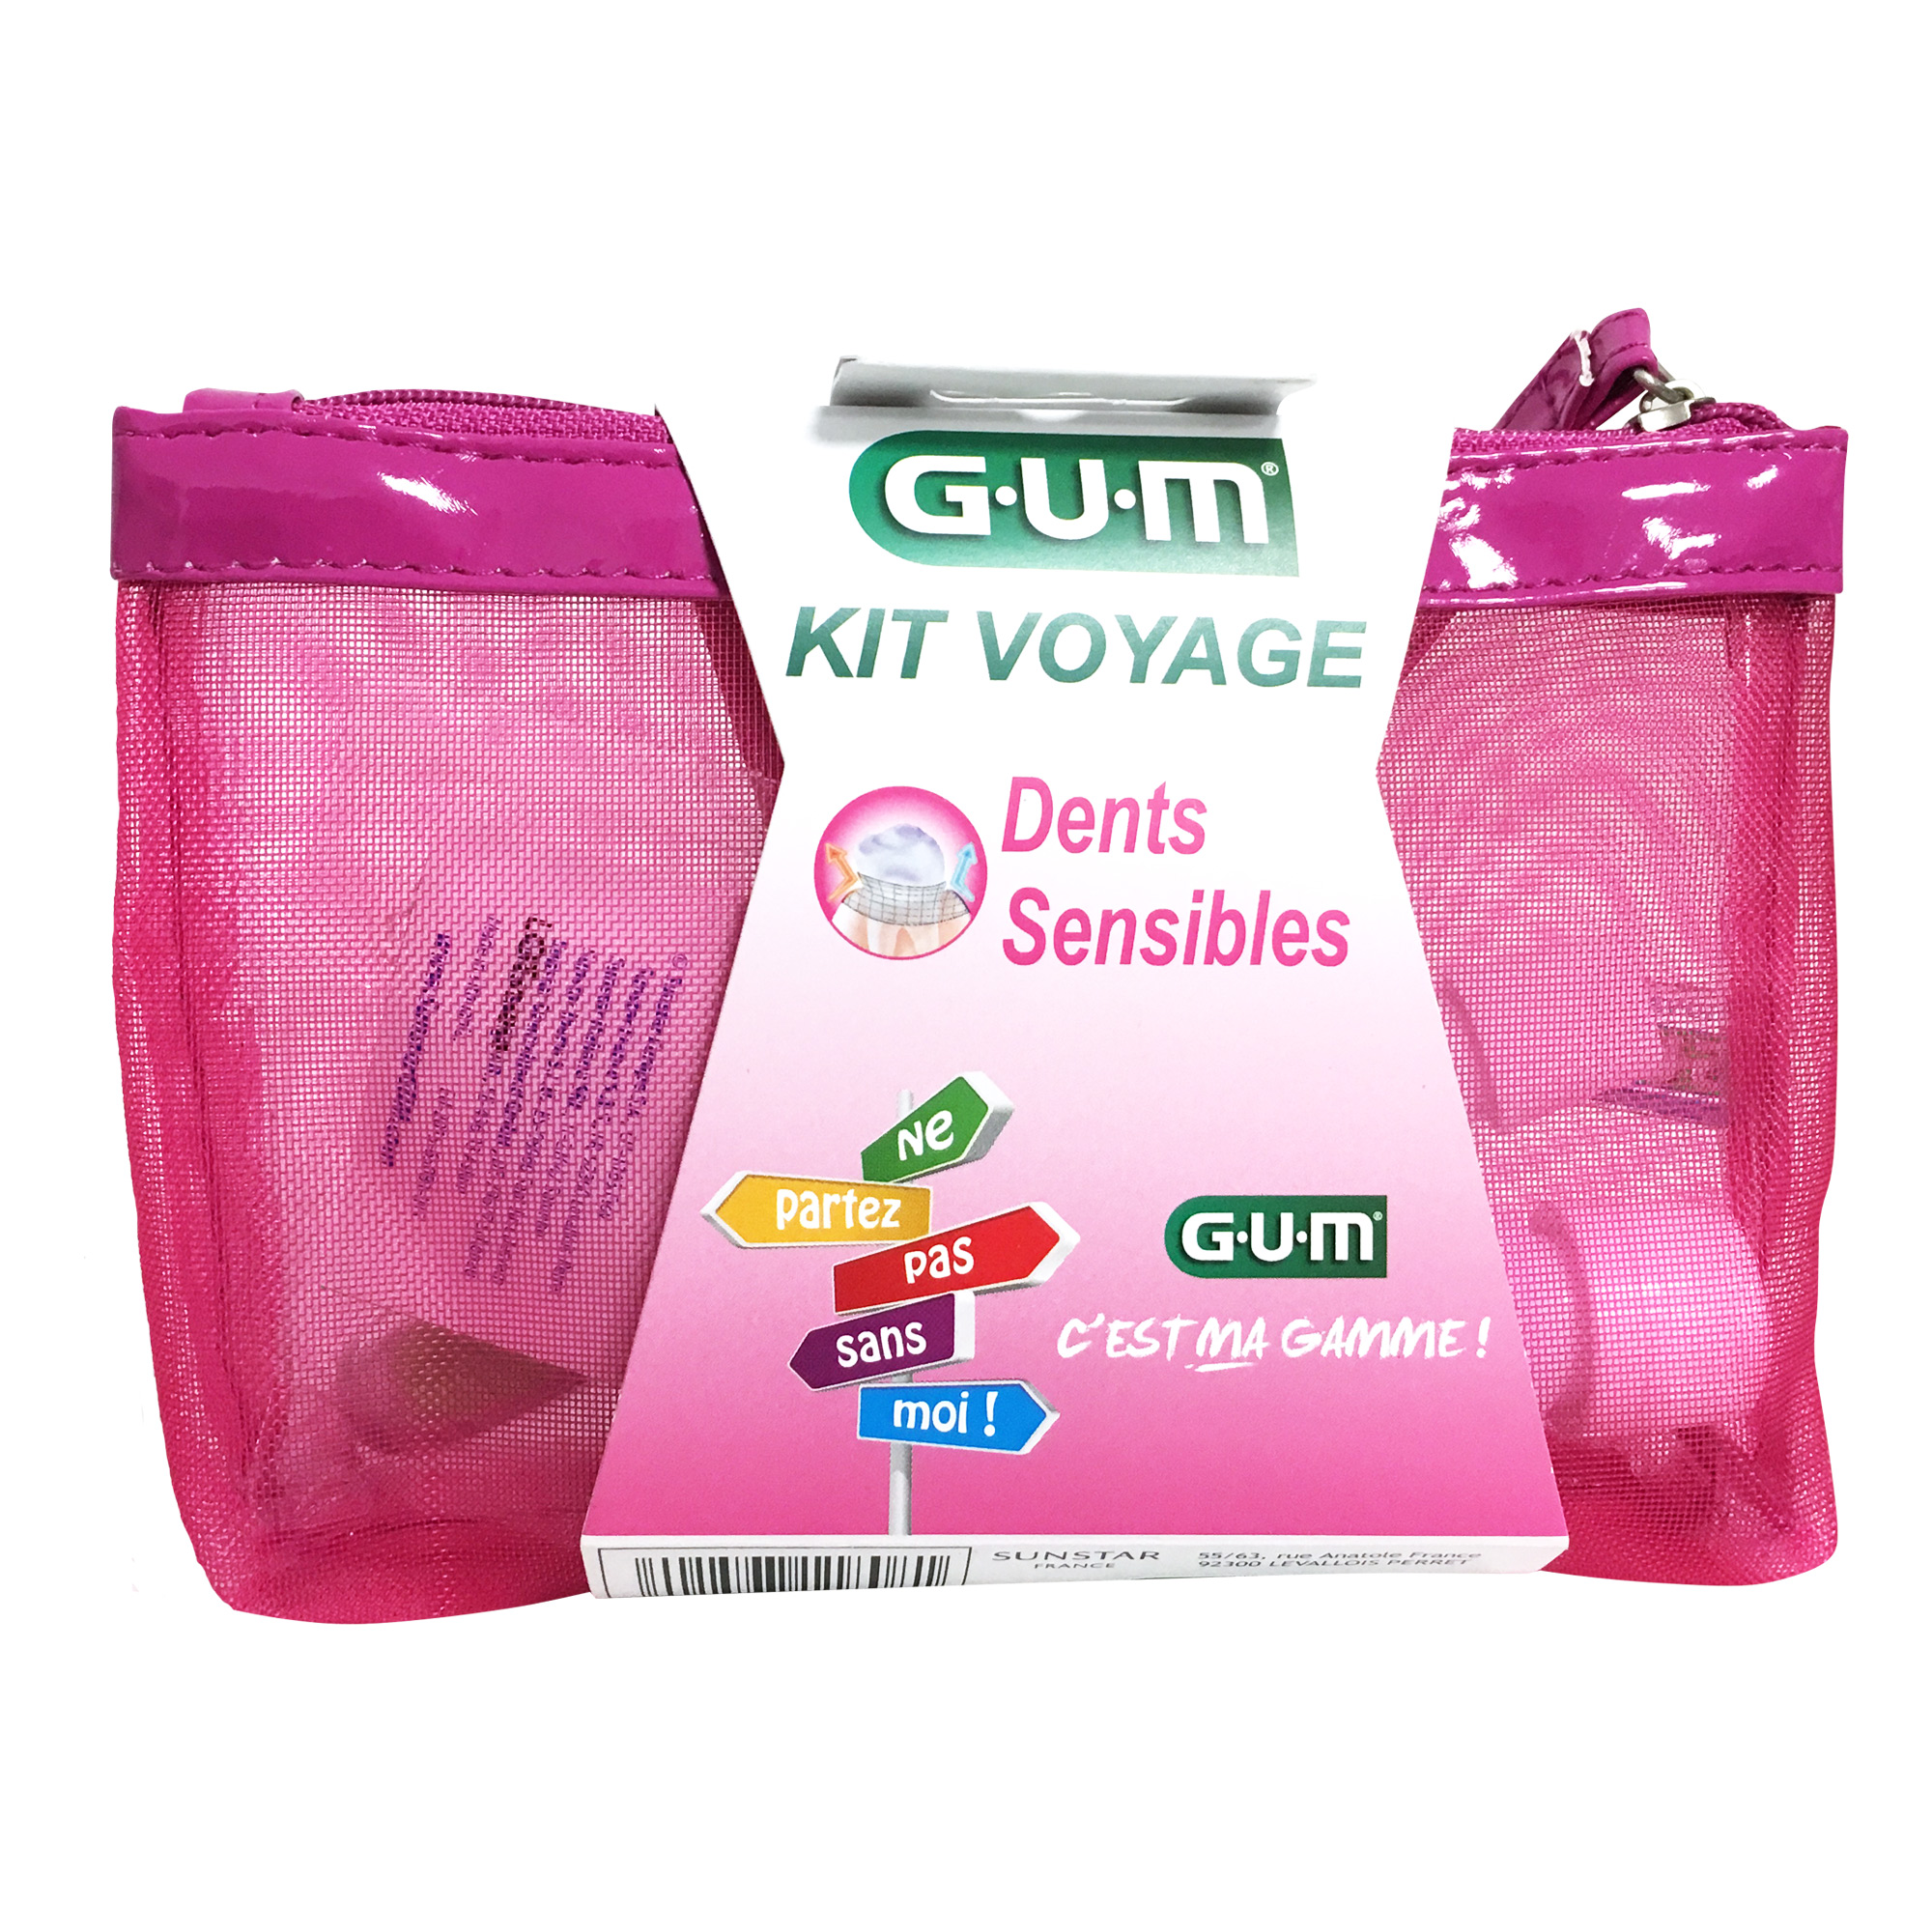 GUM Kit voyage dents sensibles - Parapharmacie Prado Mermoz